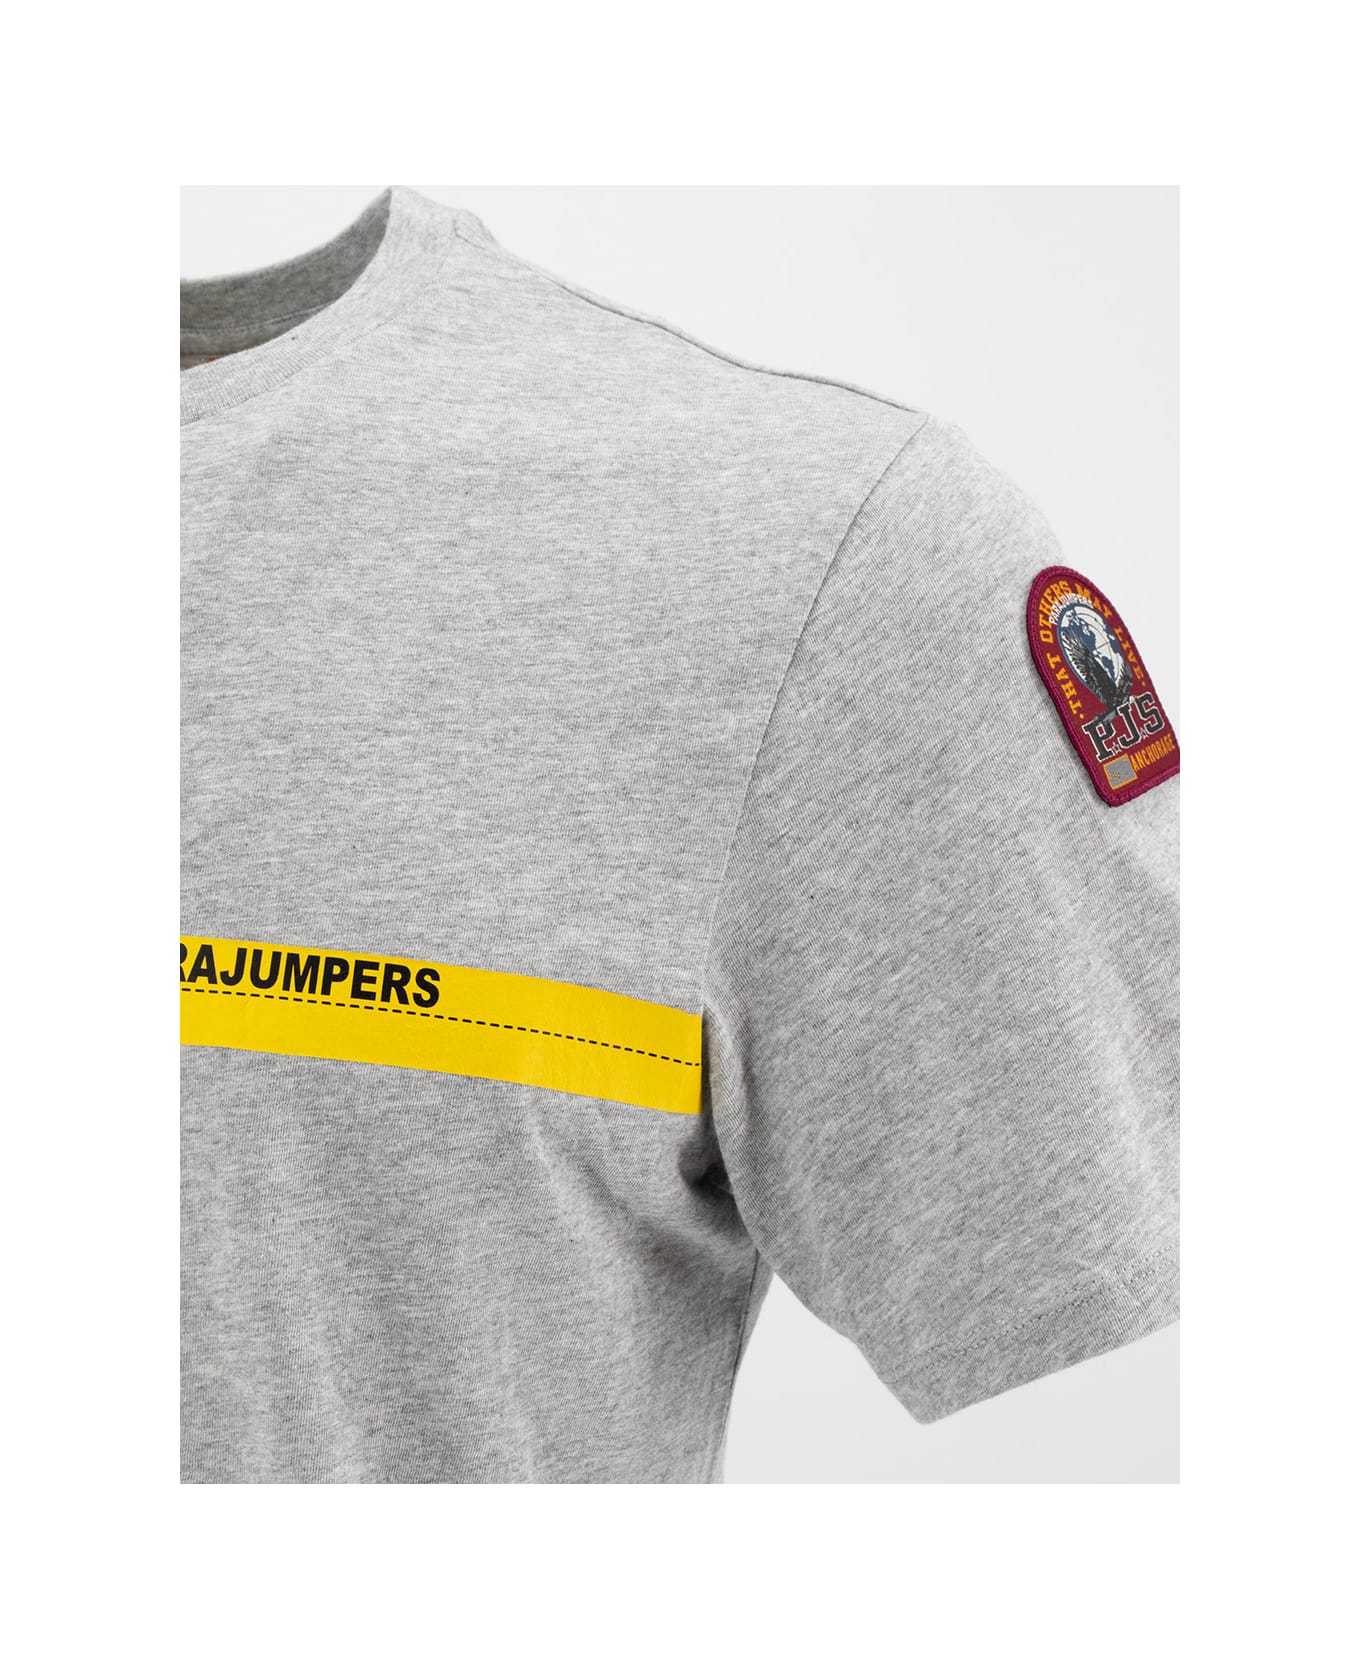 Parajumpers T-shirt - SILVER MELANGE Tシャツ